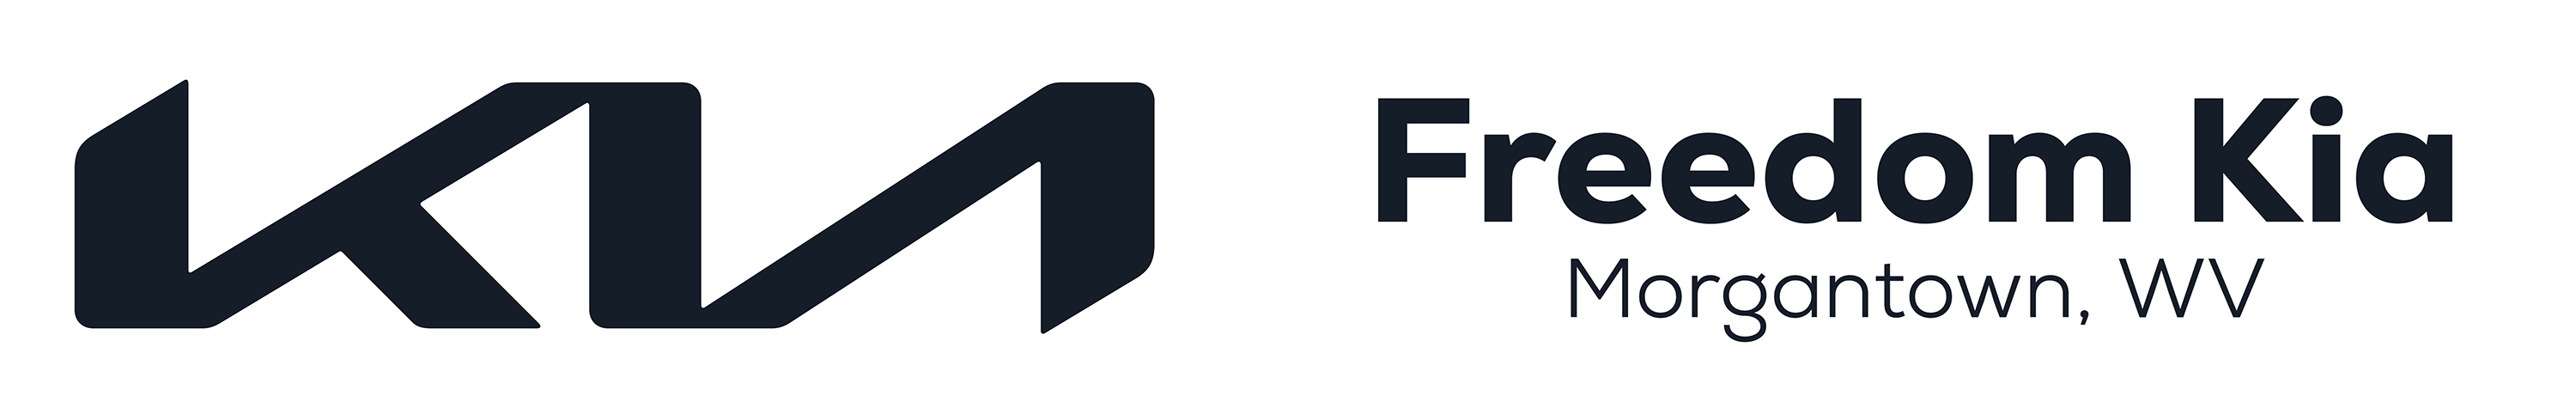 Freedom Kia logo